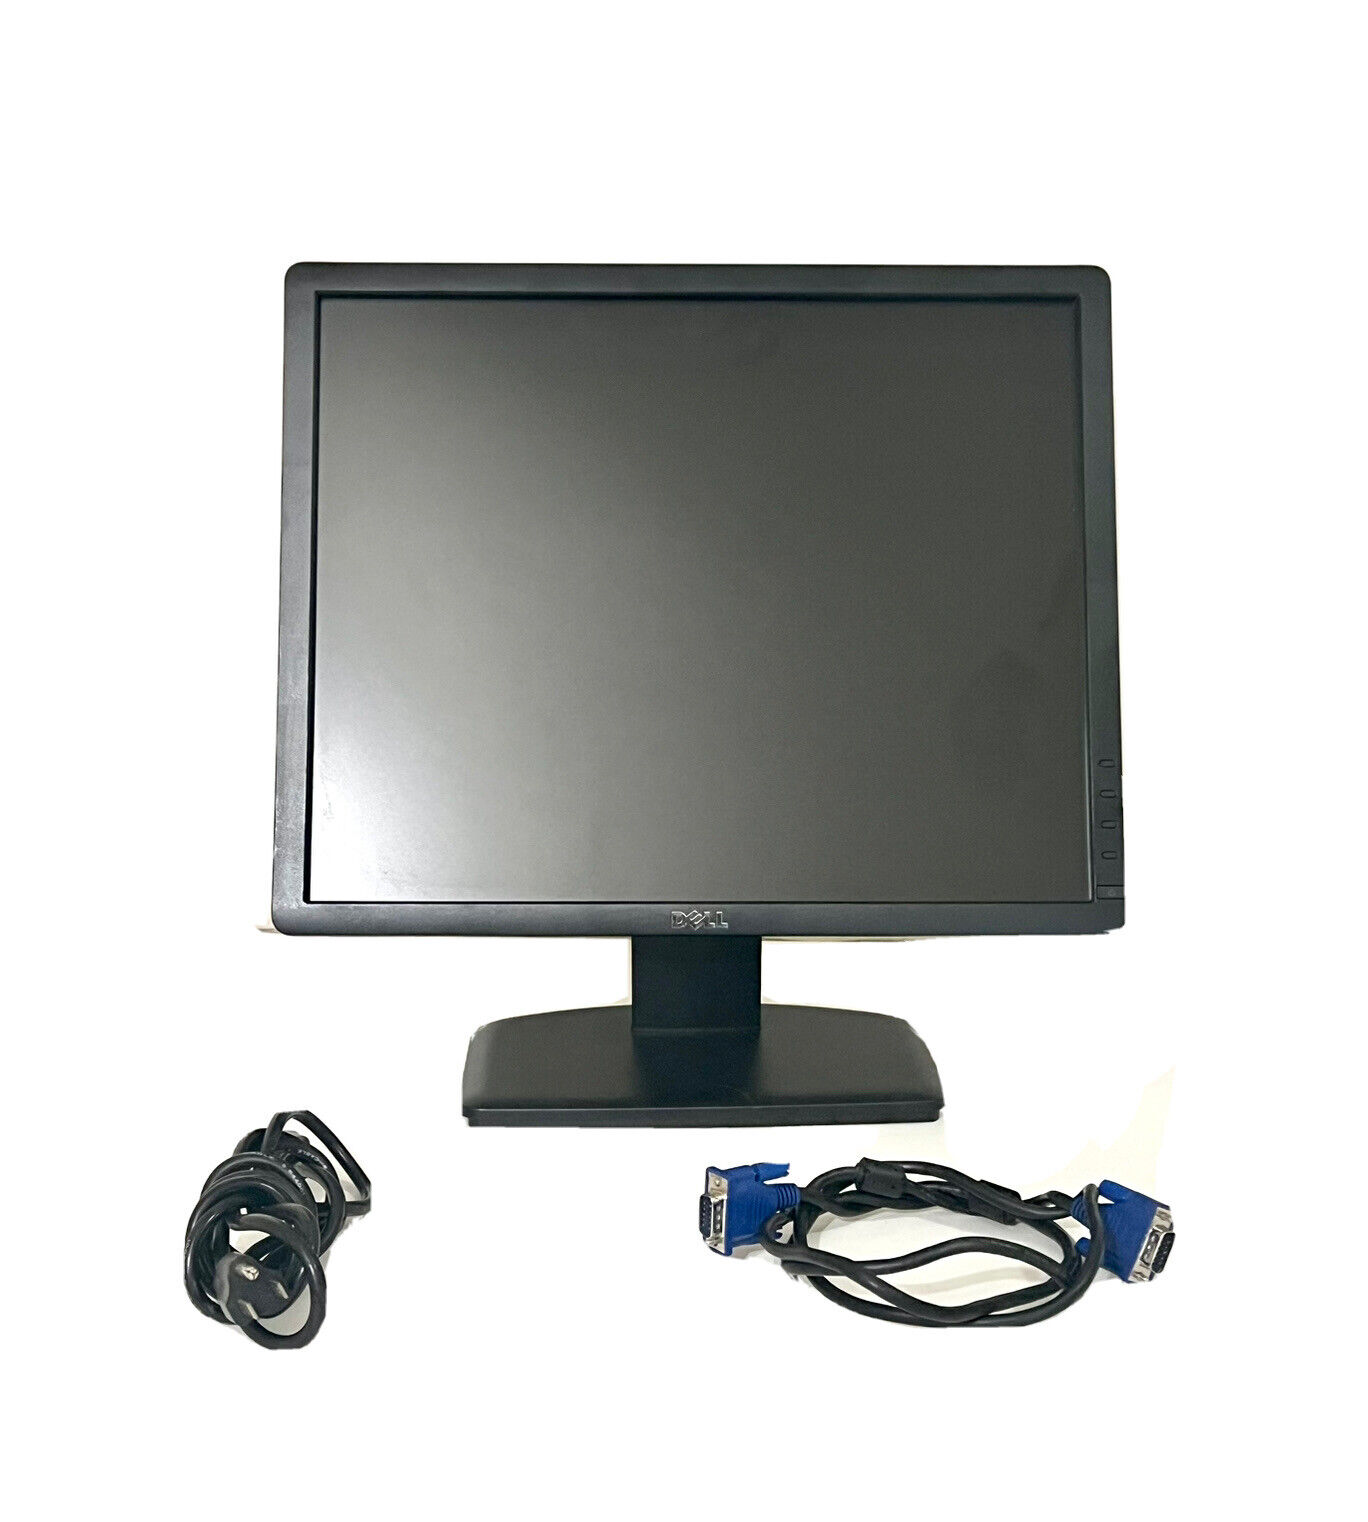 Dell Monitor Ultrasharp LCD 1280 X 1024 dpi with Power  & VGA Cable - Grade A/B